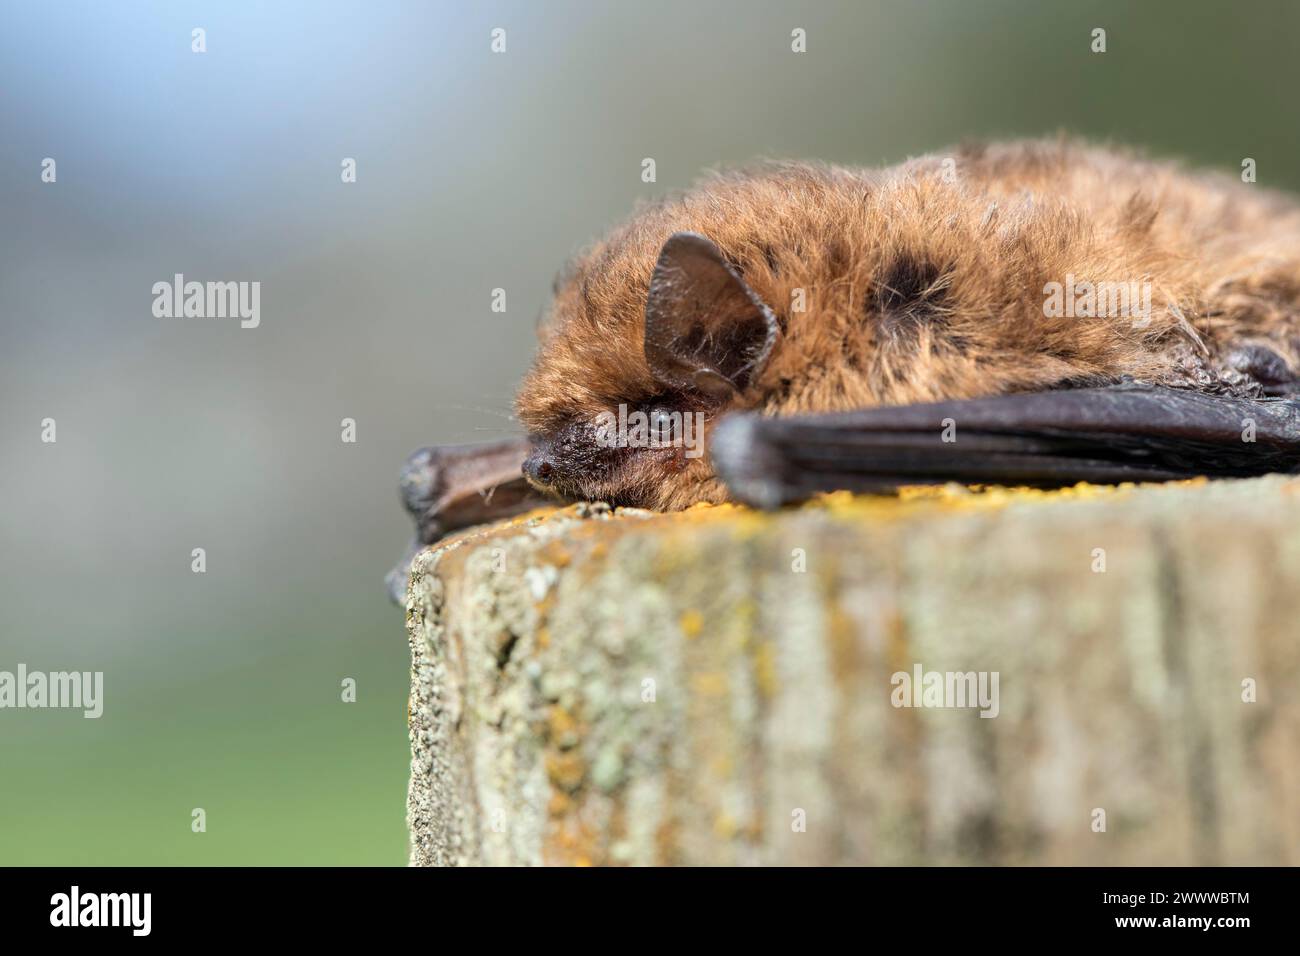 Común Pipistrelle Bat; Pipistrellus pipistrellus; Reino Unido Foto de stock